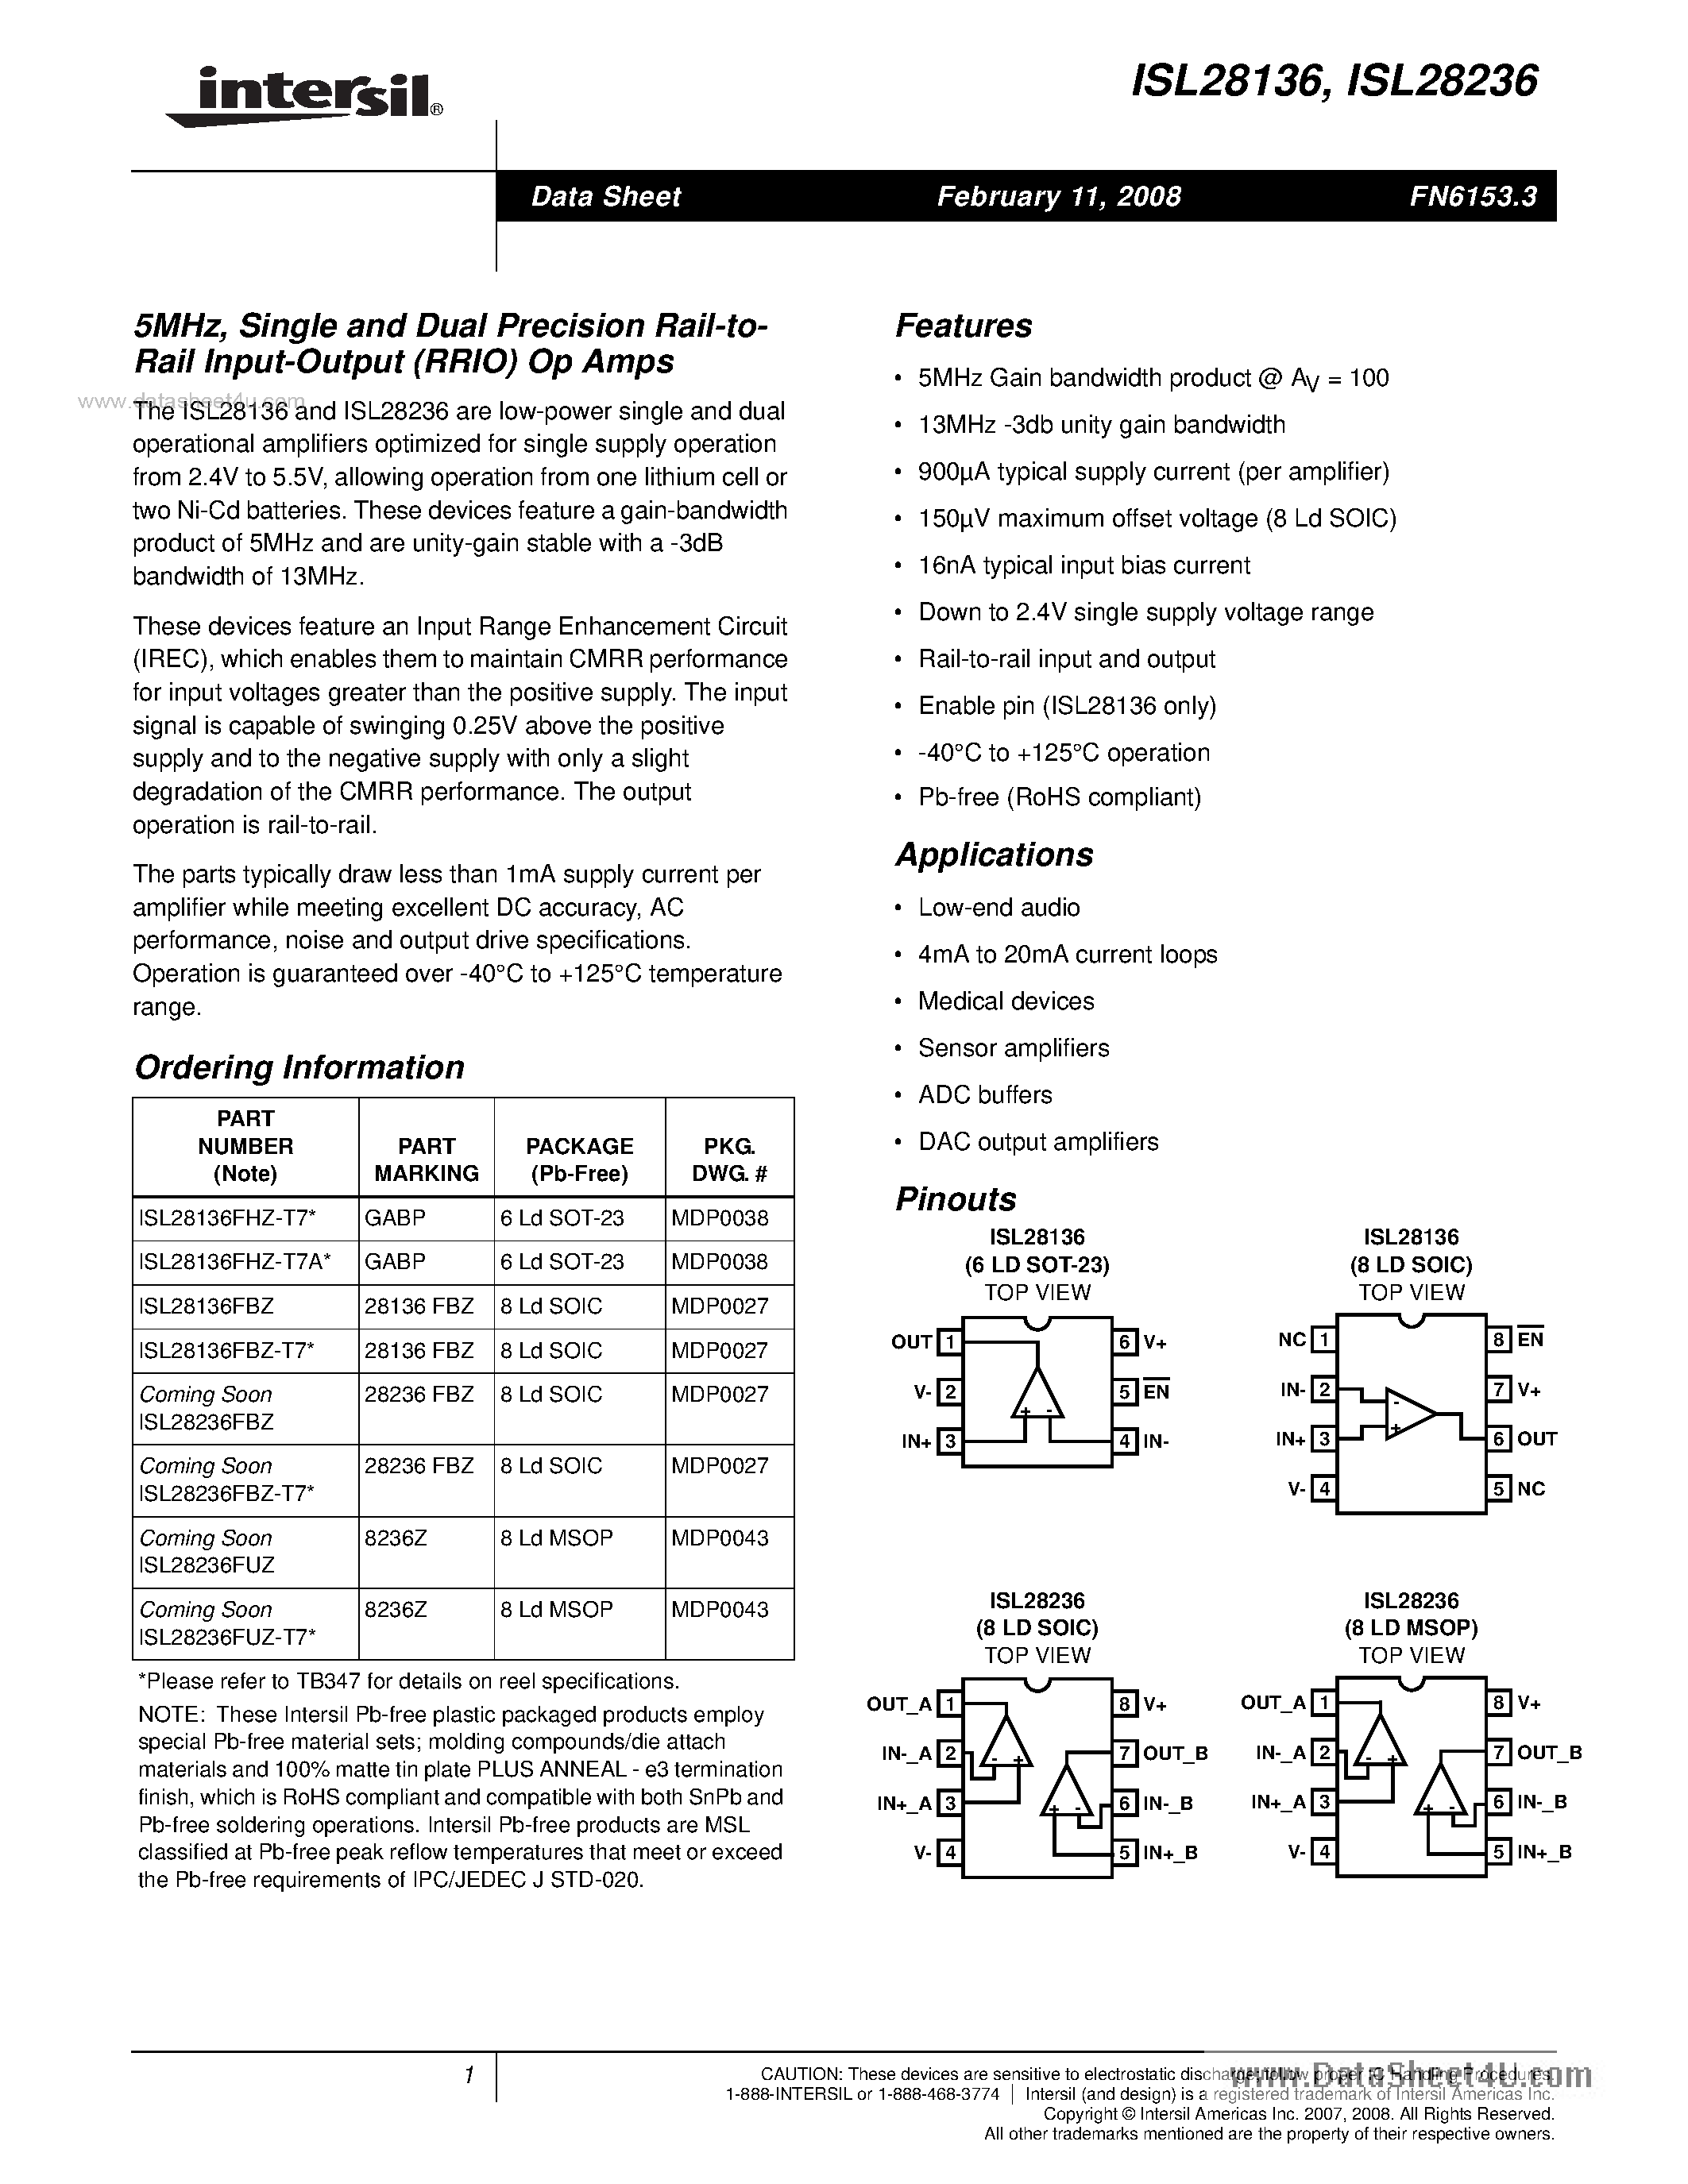 Даташит ISL28236 - (ISL28136 / ISL28236) Single and Dual Precision Rail-to-Rail Input-Output (RRIO) Op Amps страница 1